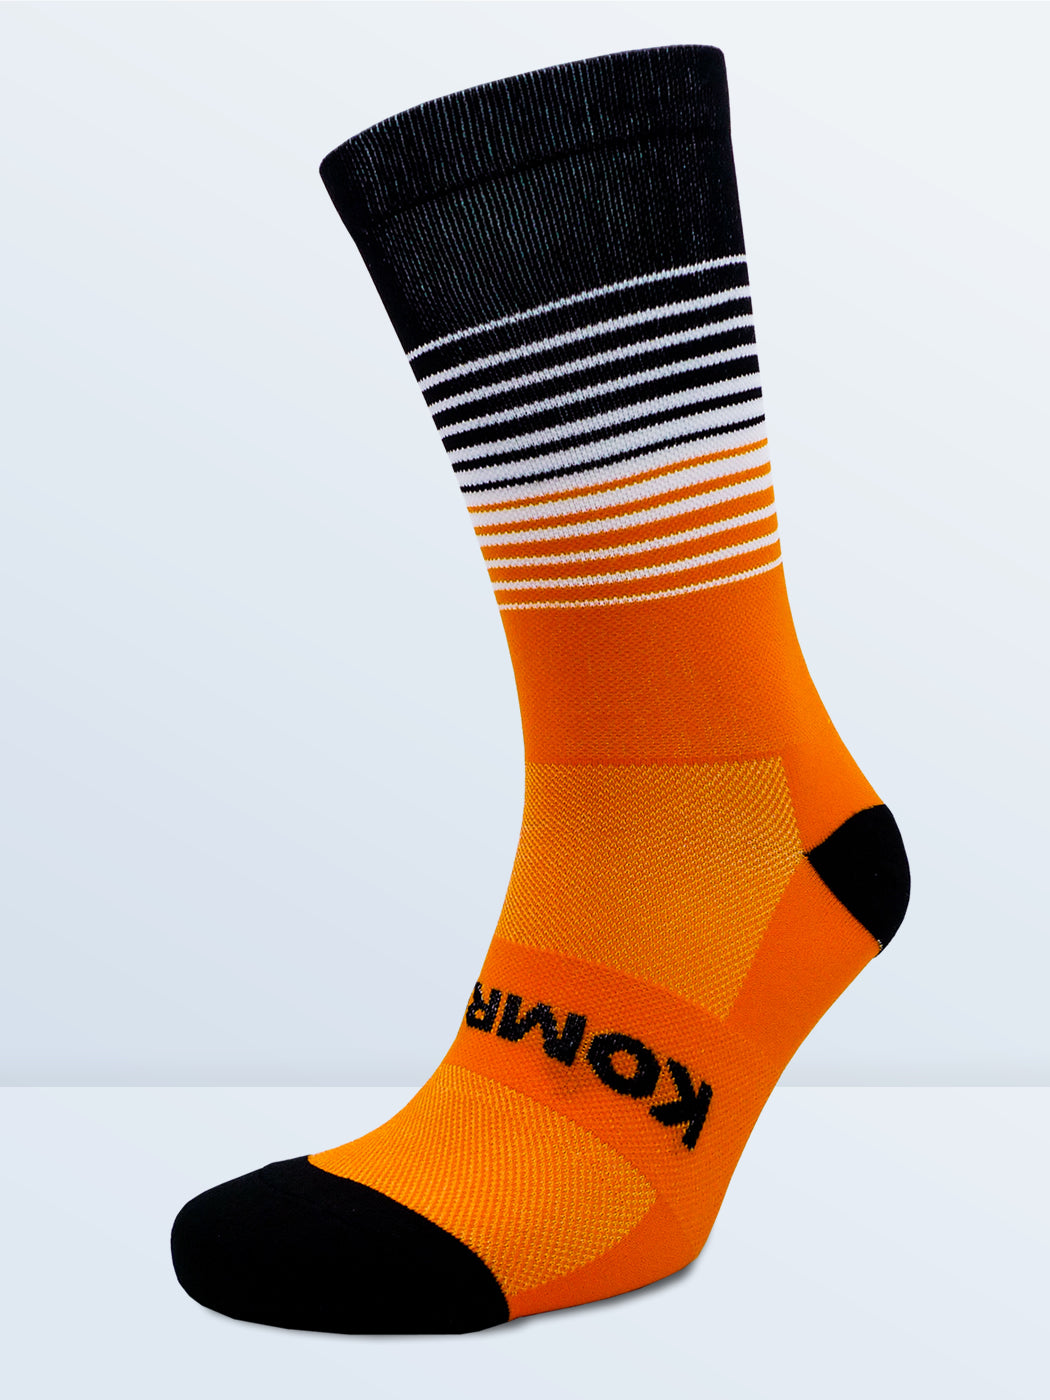 Swagger Socks - Fluro Orange & Black